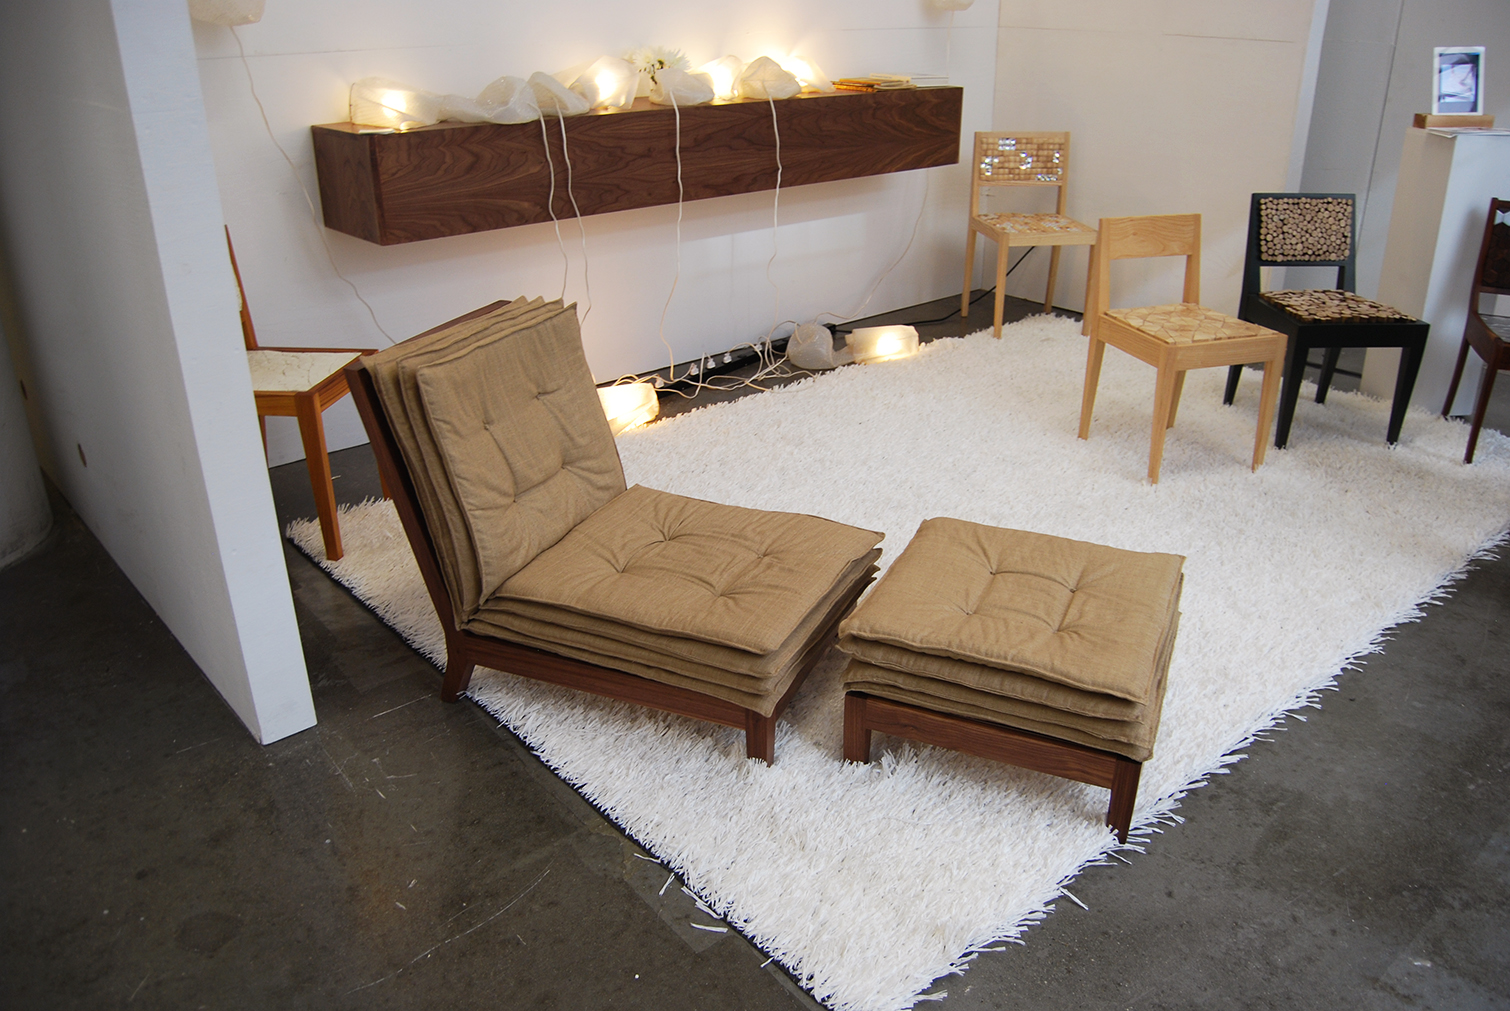 Factory Floor Brooklyn 2013: New Colony Furniture